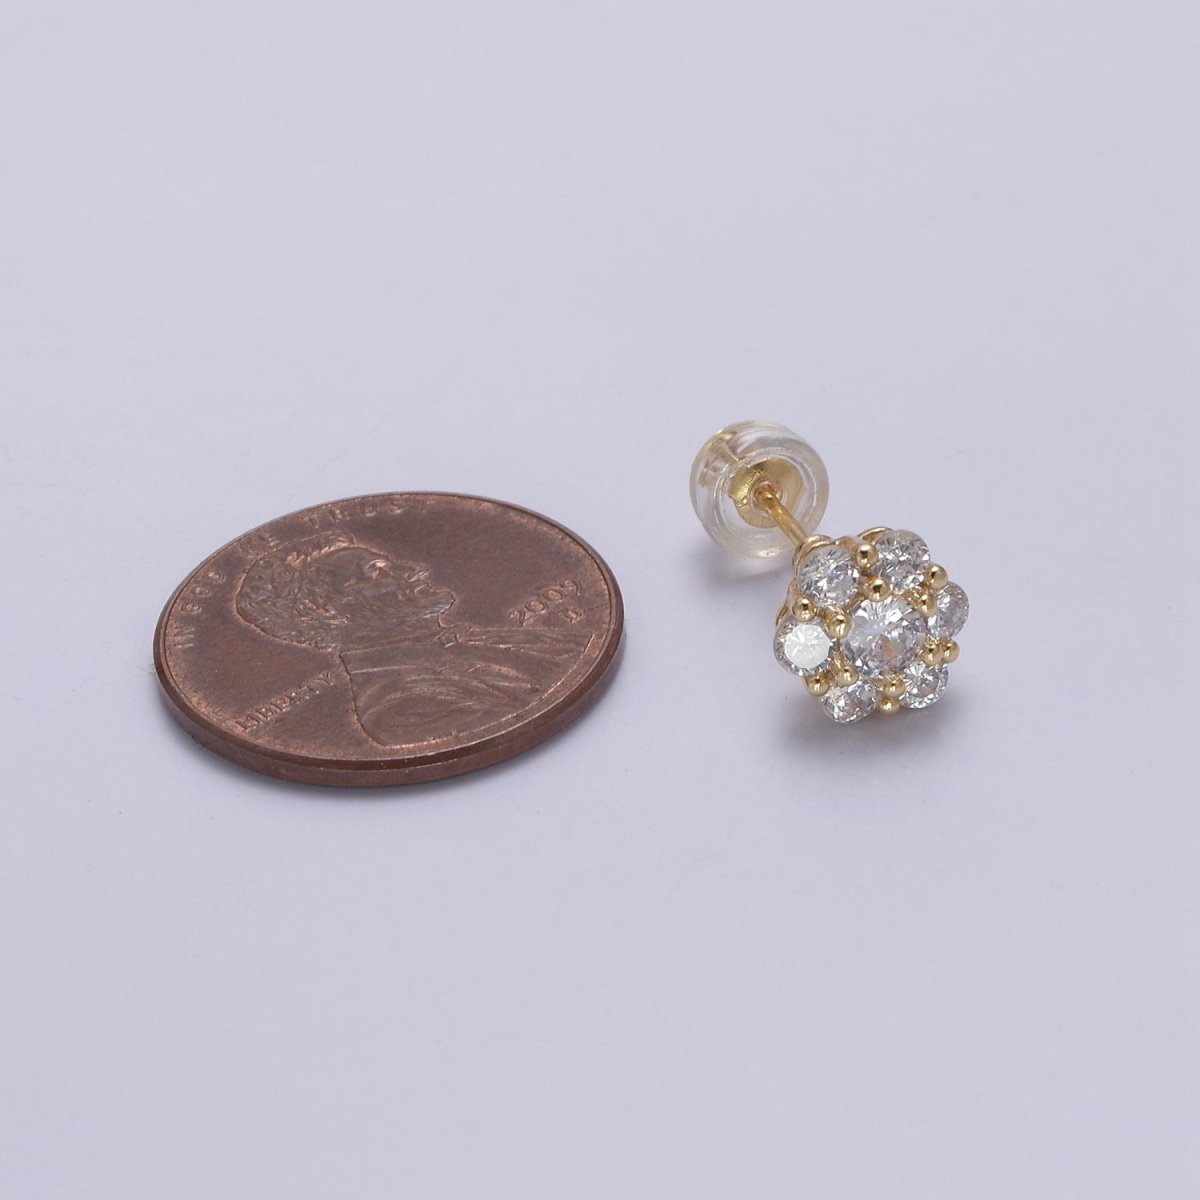 OS Dainty Flower Earring Cartilage Stud Earring, Tragus Stud, Perfect Gift Idea, Minimalist Earring, Dainty CZ Flower Stud T-342 - DLUXCA